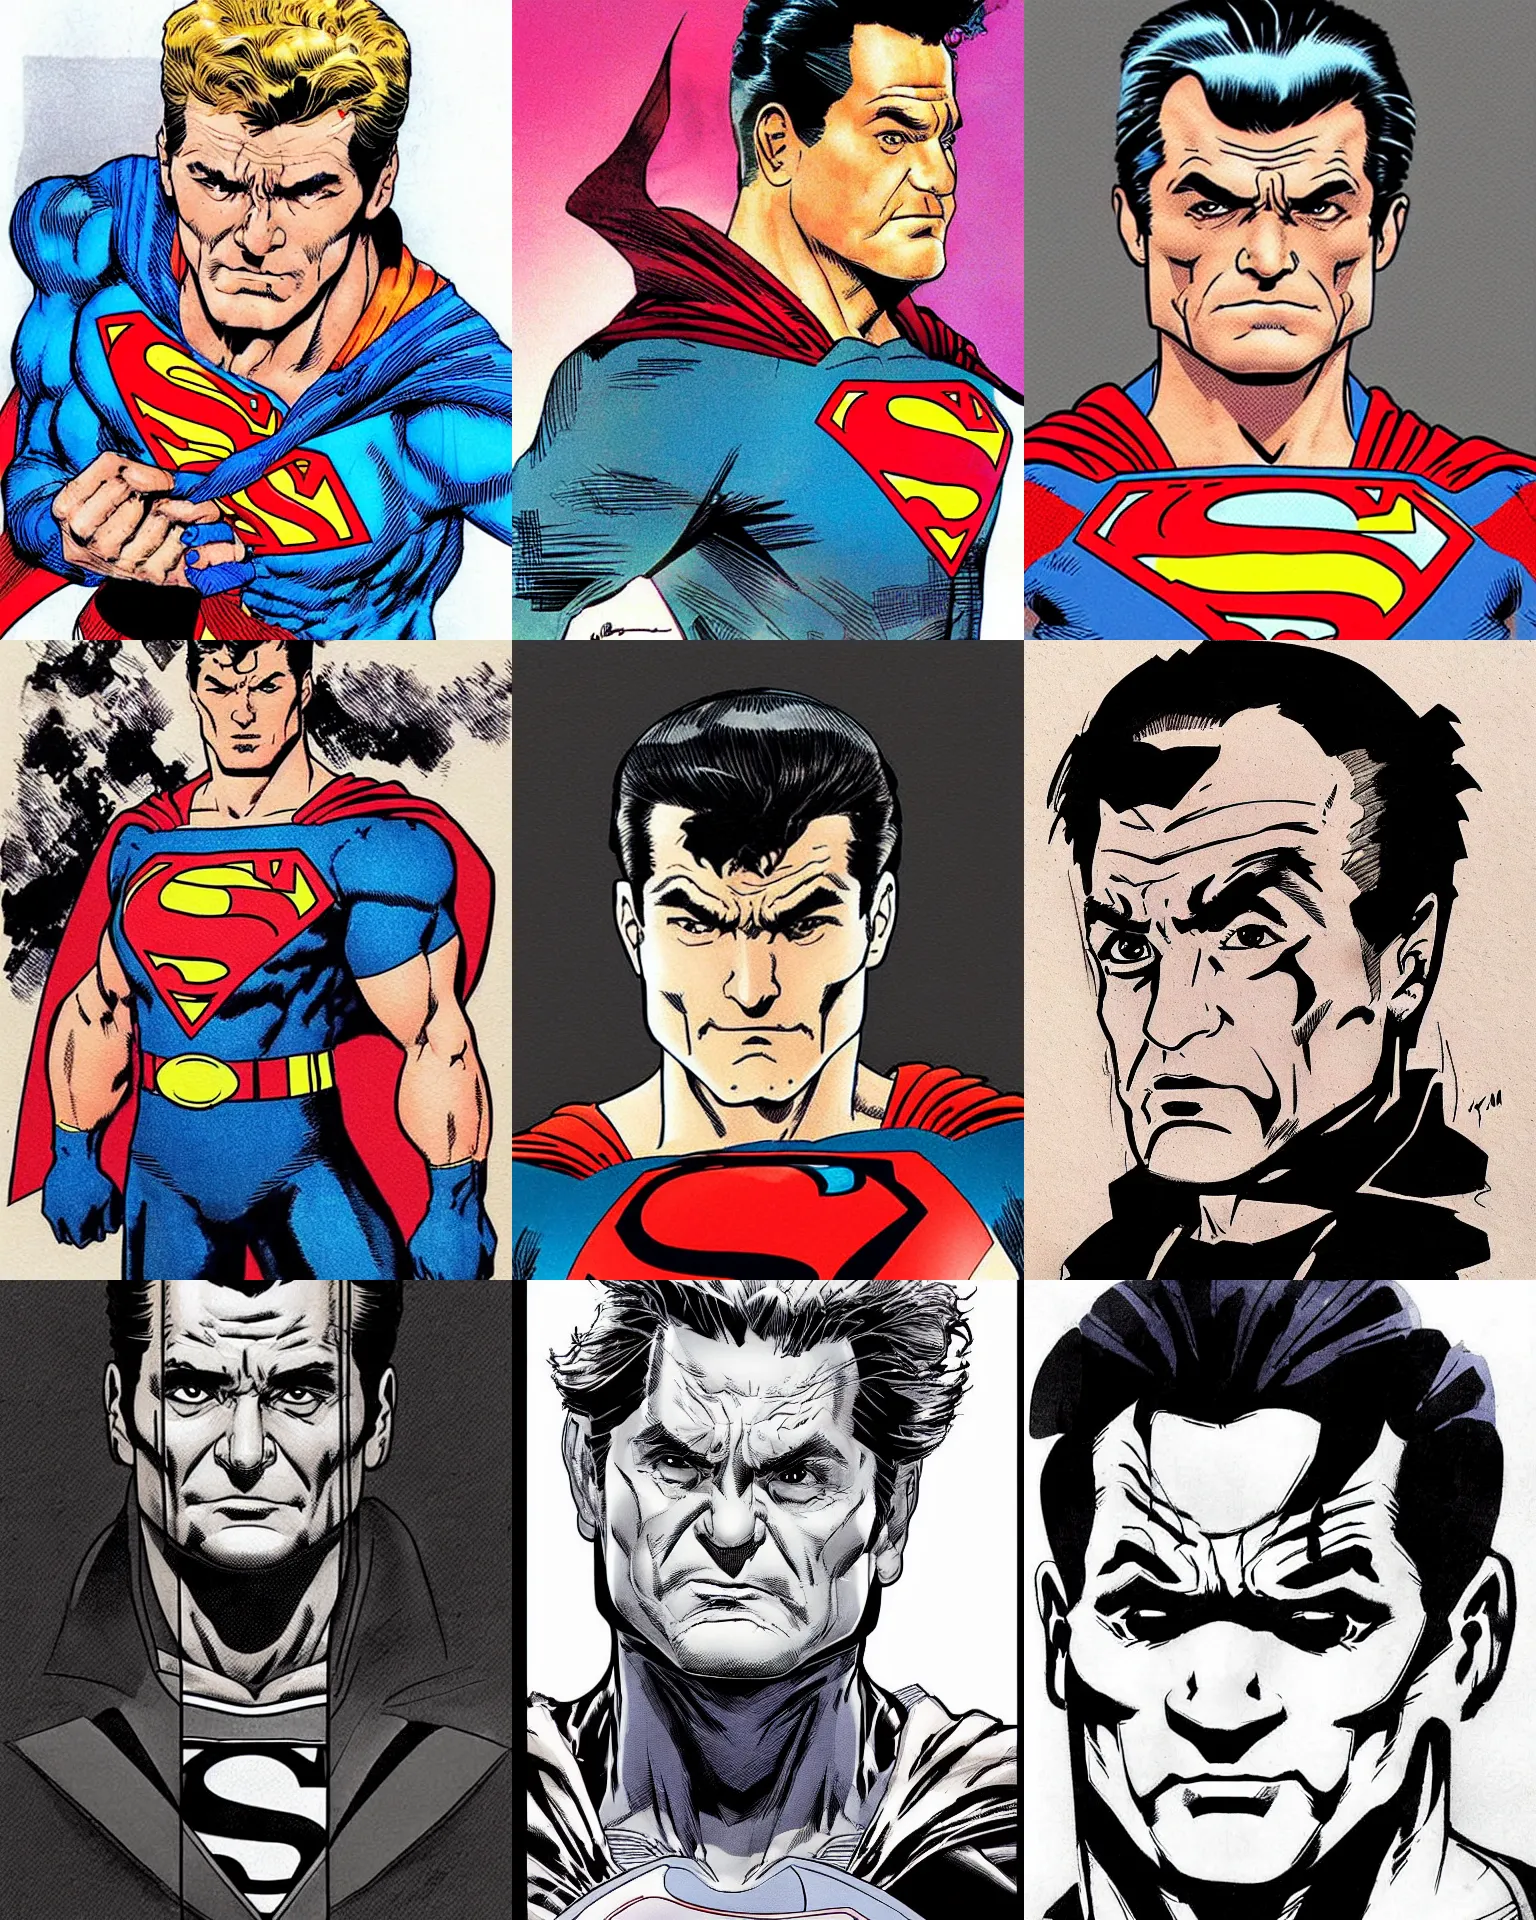 Prompt: joe pesci!!! jim lee!!! flat ink sketch by jim lee face close up headshot superman costume in the style of jim lee, x - men superhero comic book character by jim lee